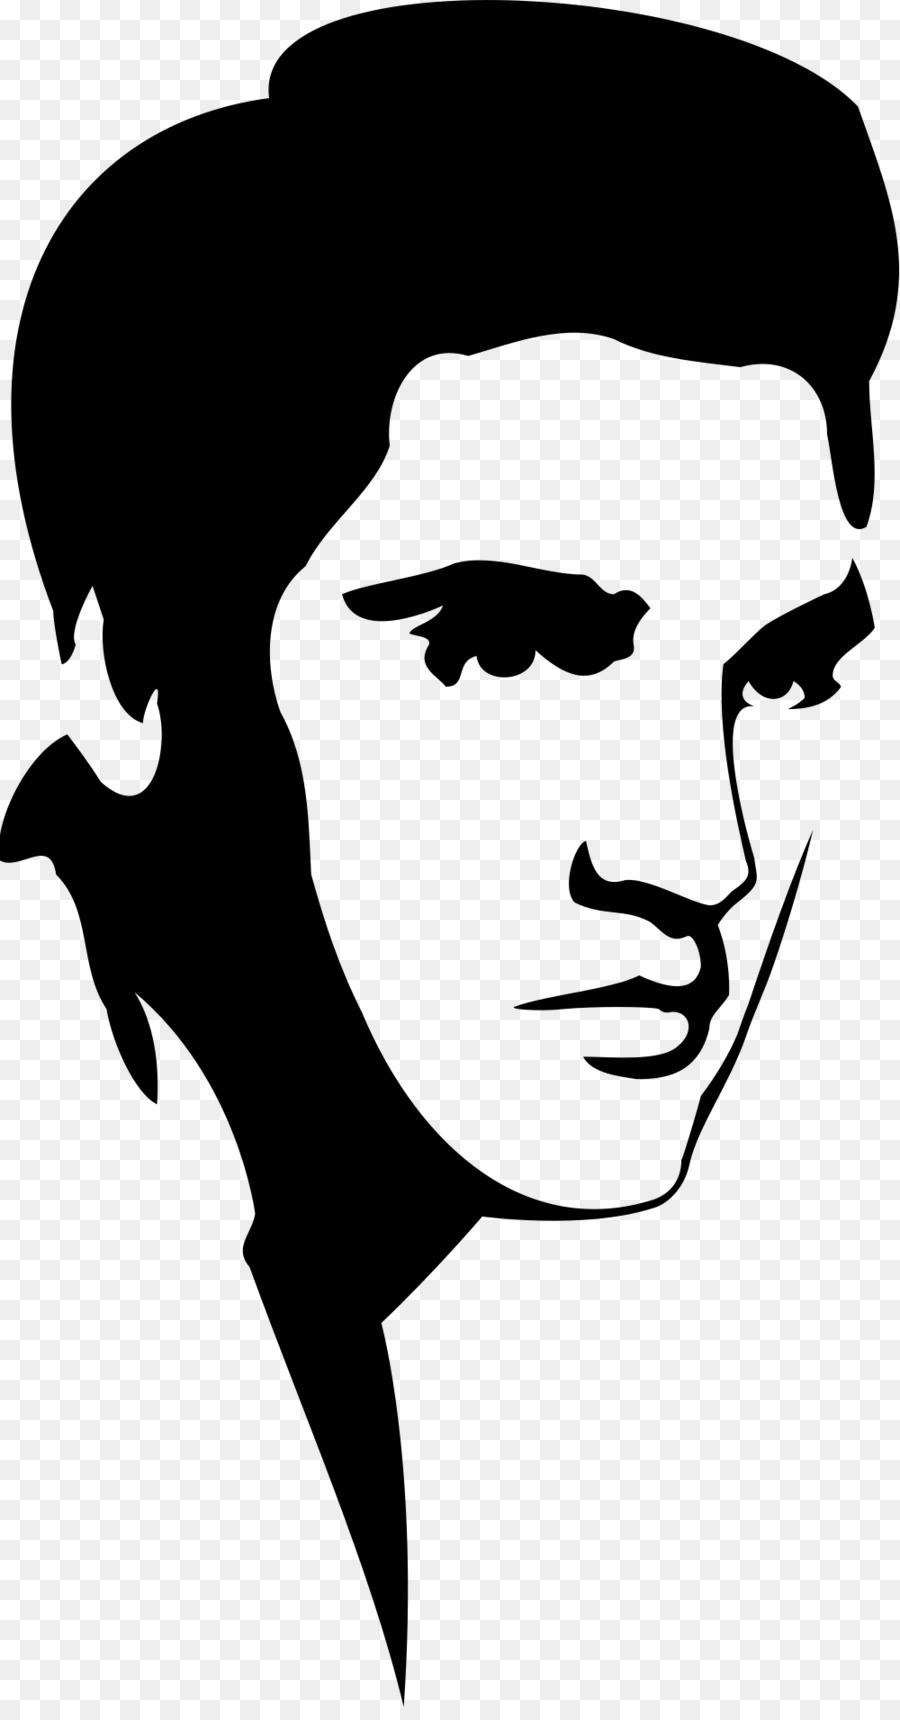 Elvis clipart. Presley stencil silhouette clip